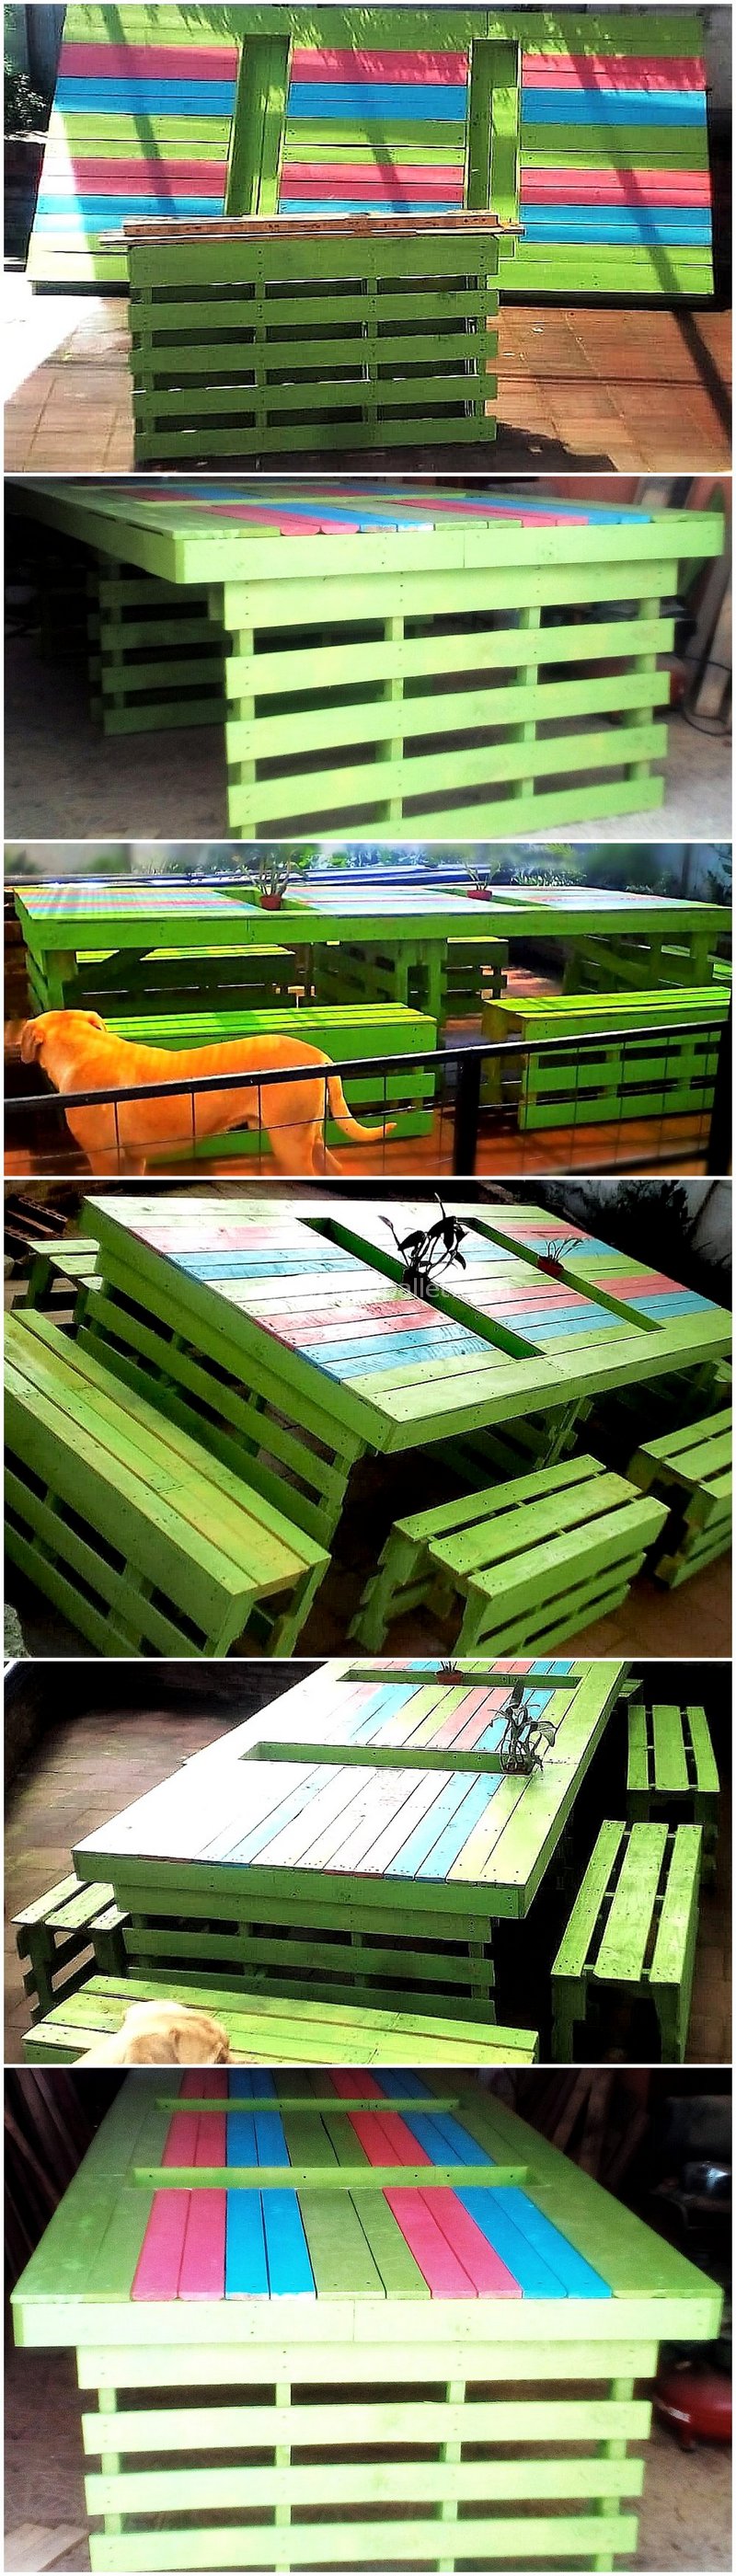 DIY Recycled Pallet Furniture